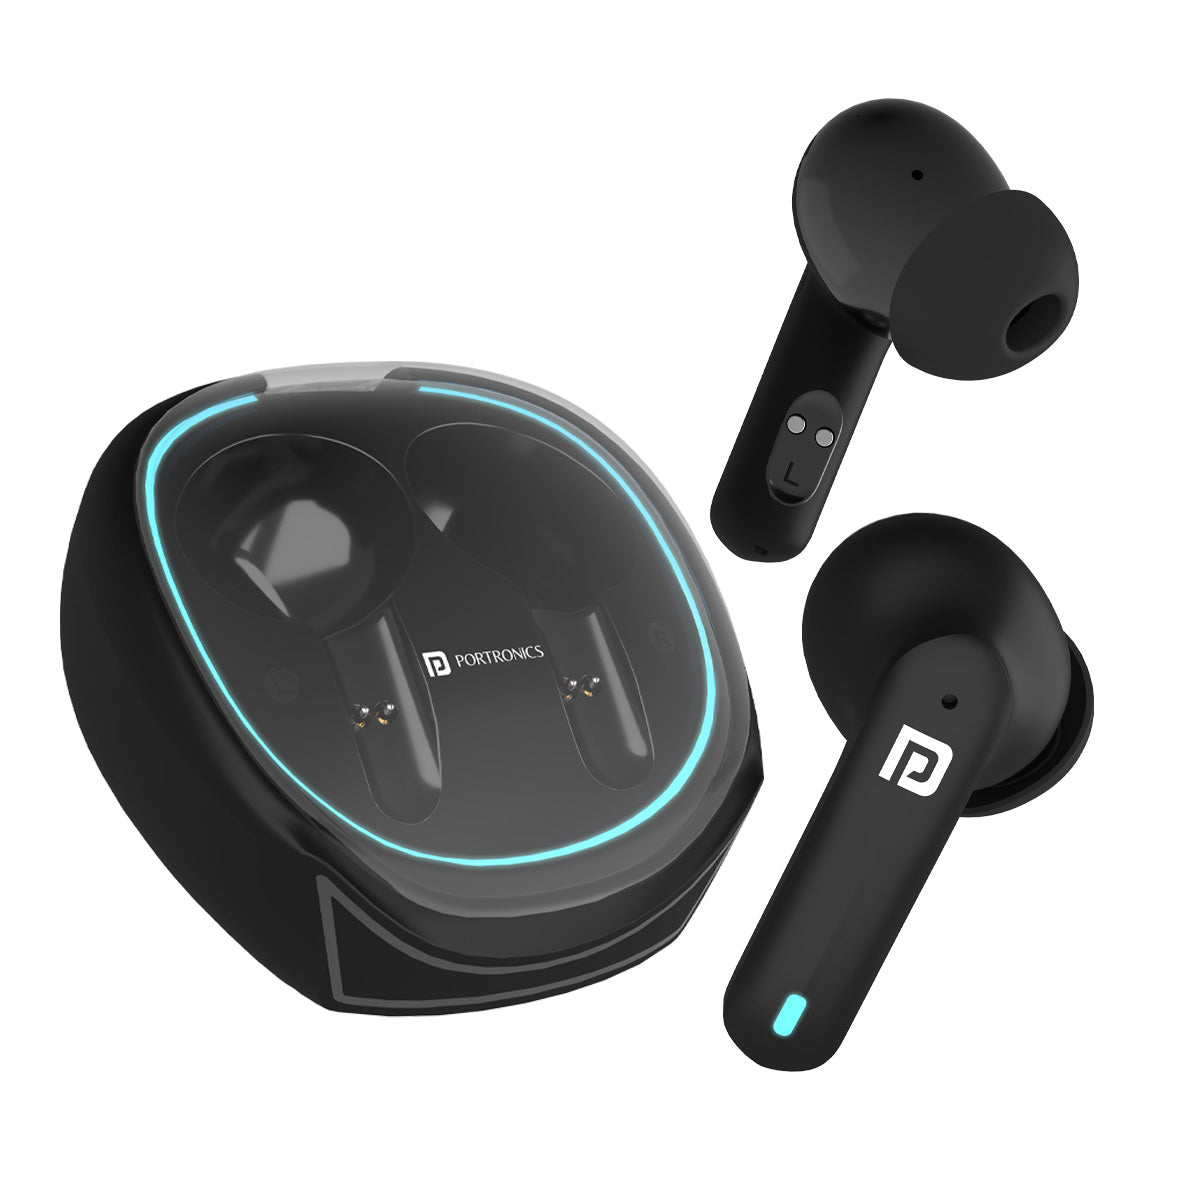 Black Portronics Harmonics Twins s11 wireless earbuds| best earbuds online with mic